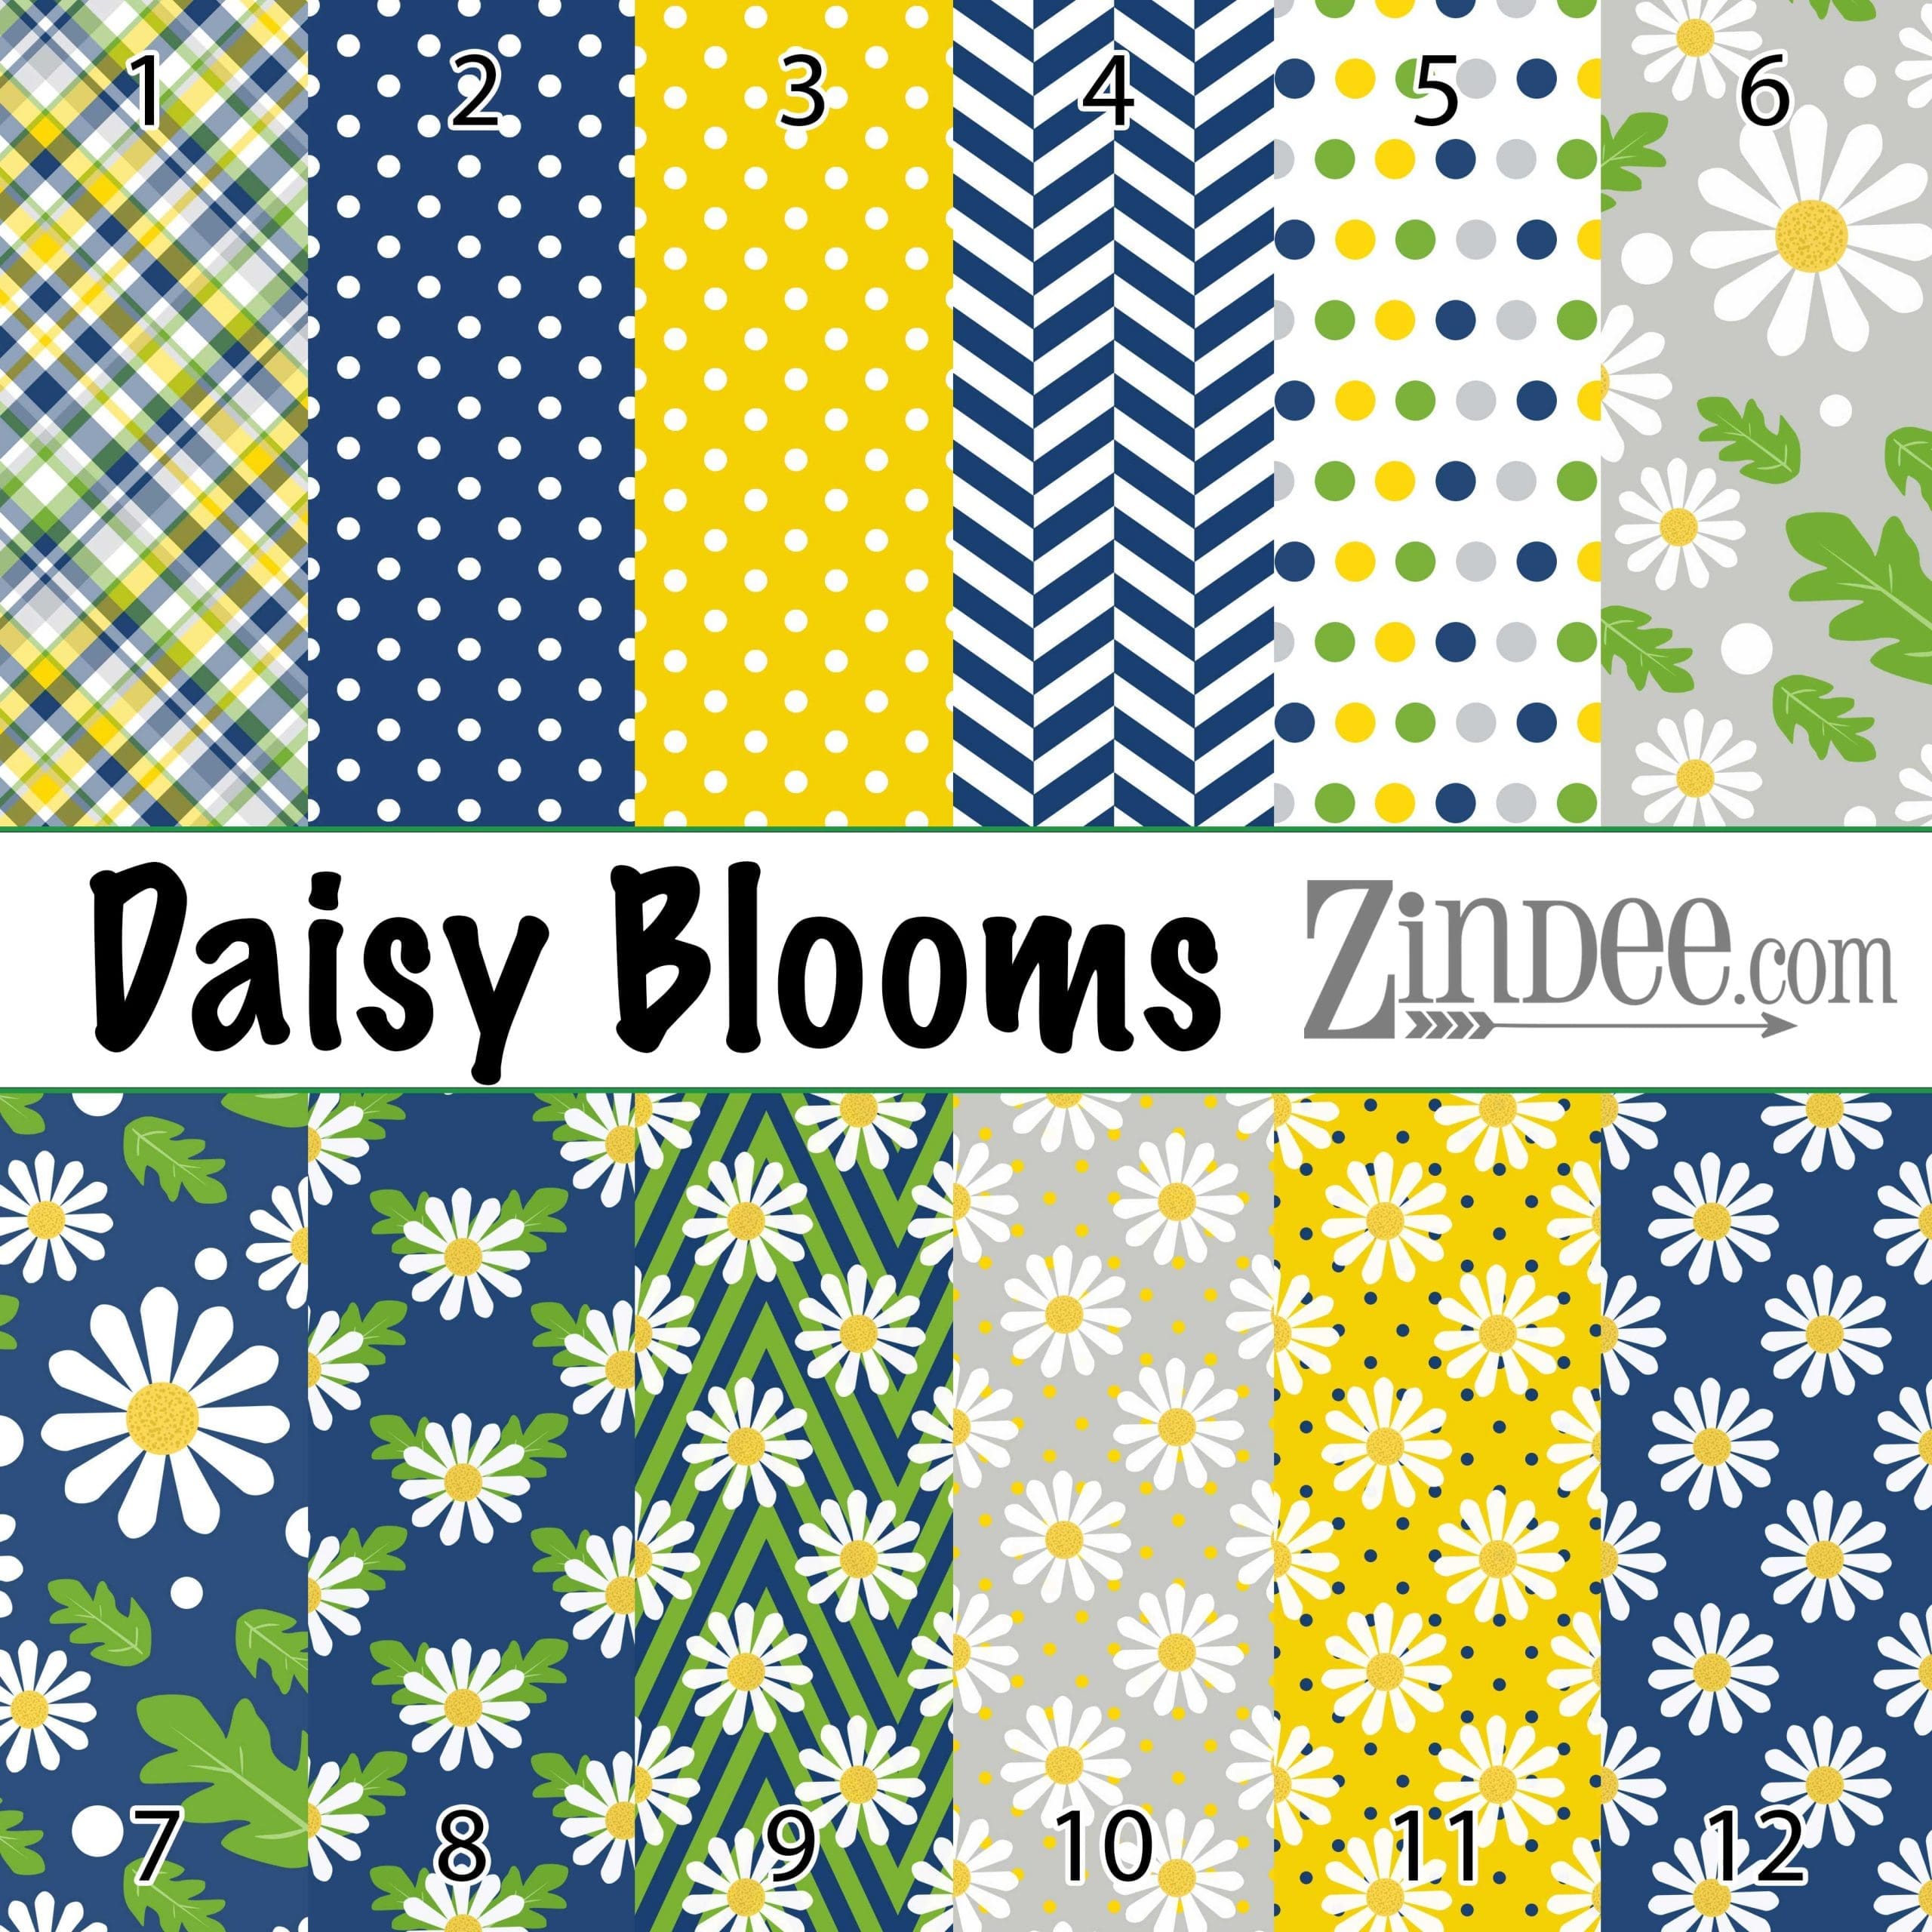 Daisy Blooms (vinyl) – Acrylic Blanks, Stickers, Printed Vinyl